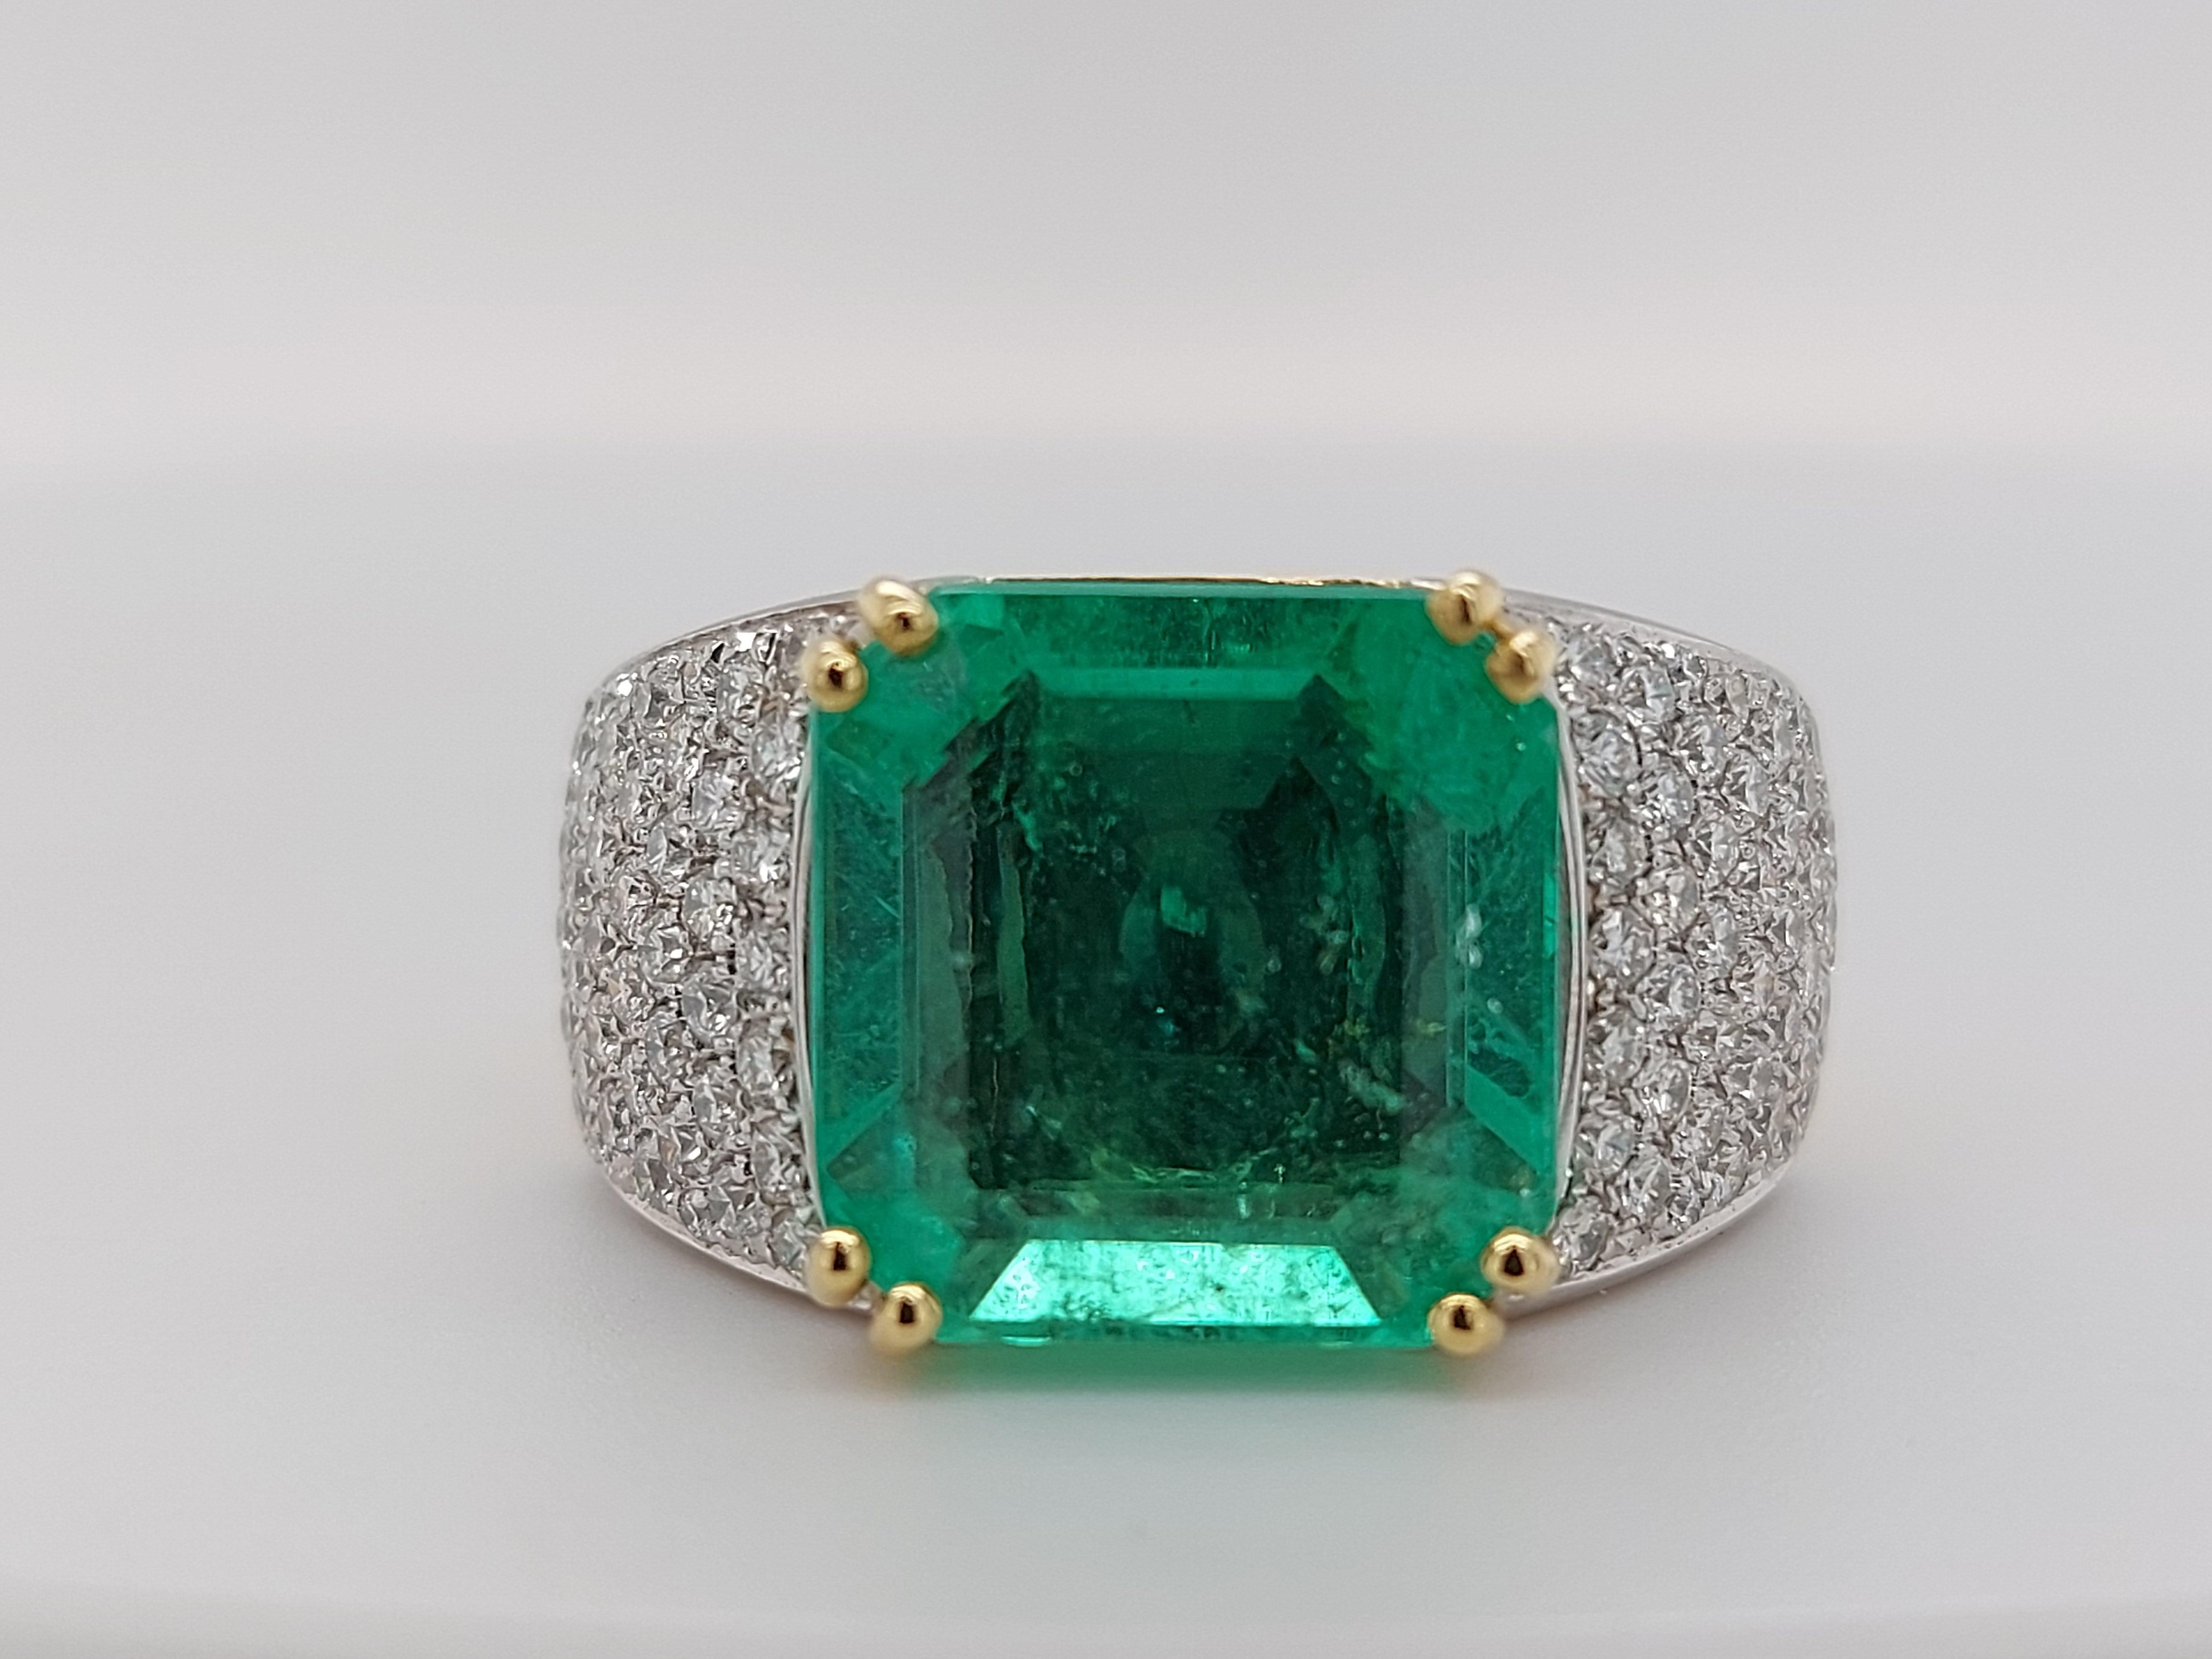 Emerald Cut 18kt Ring with 11.11 Carat Colombian Emerald & 1.64 Carat Brilliant Cut Diamonds For Sale